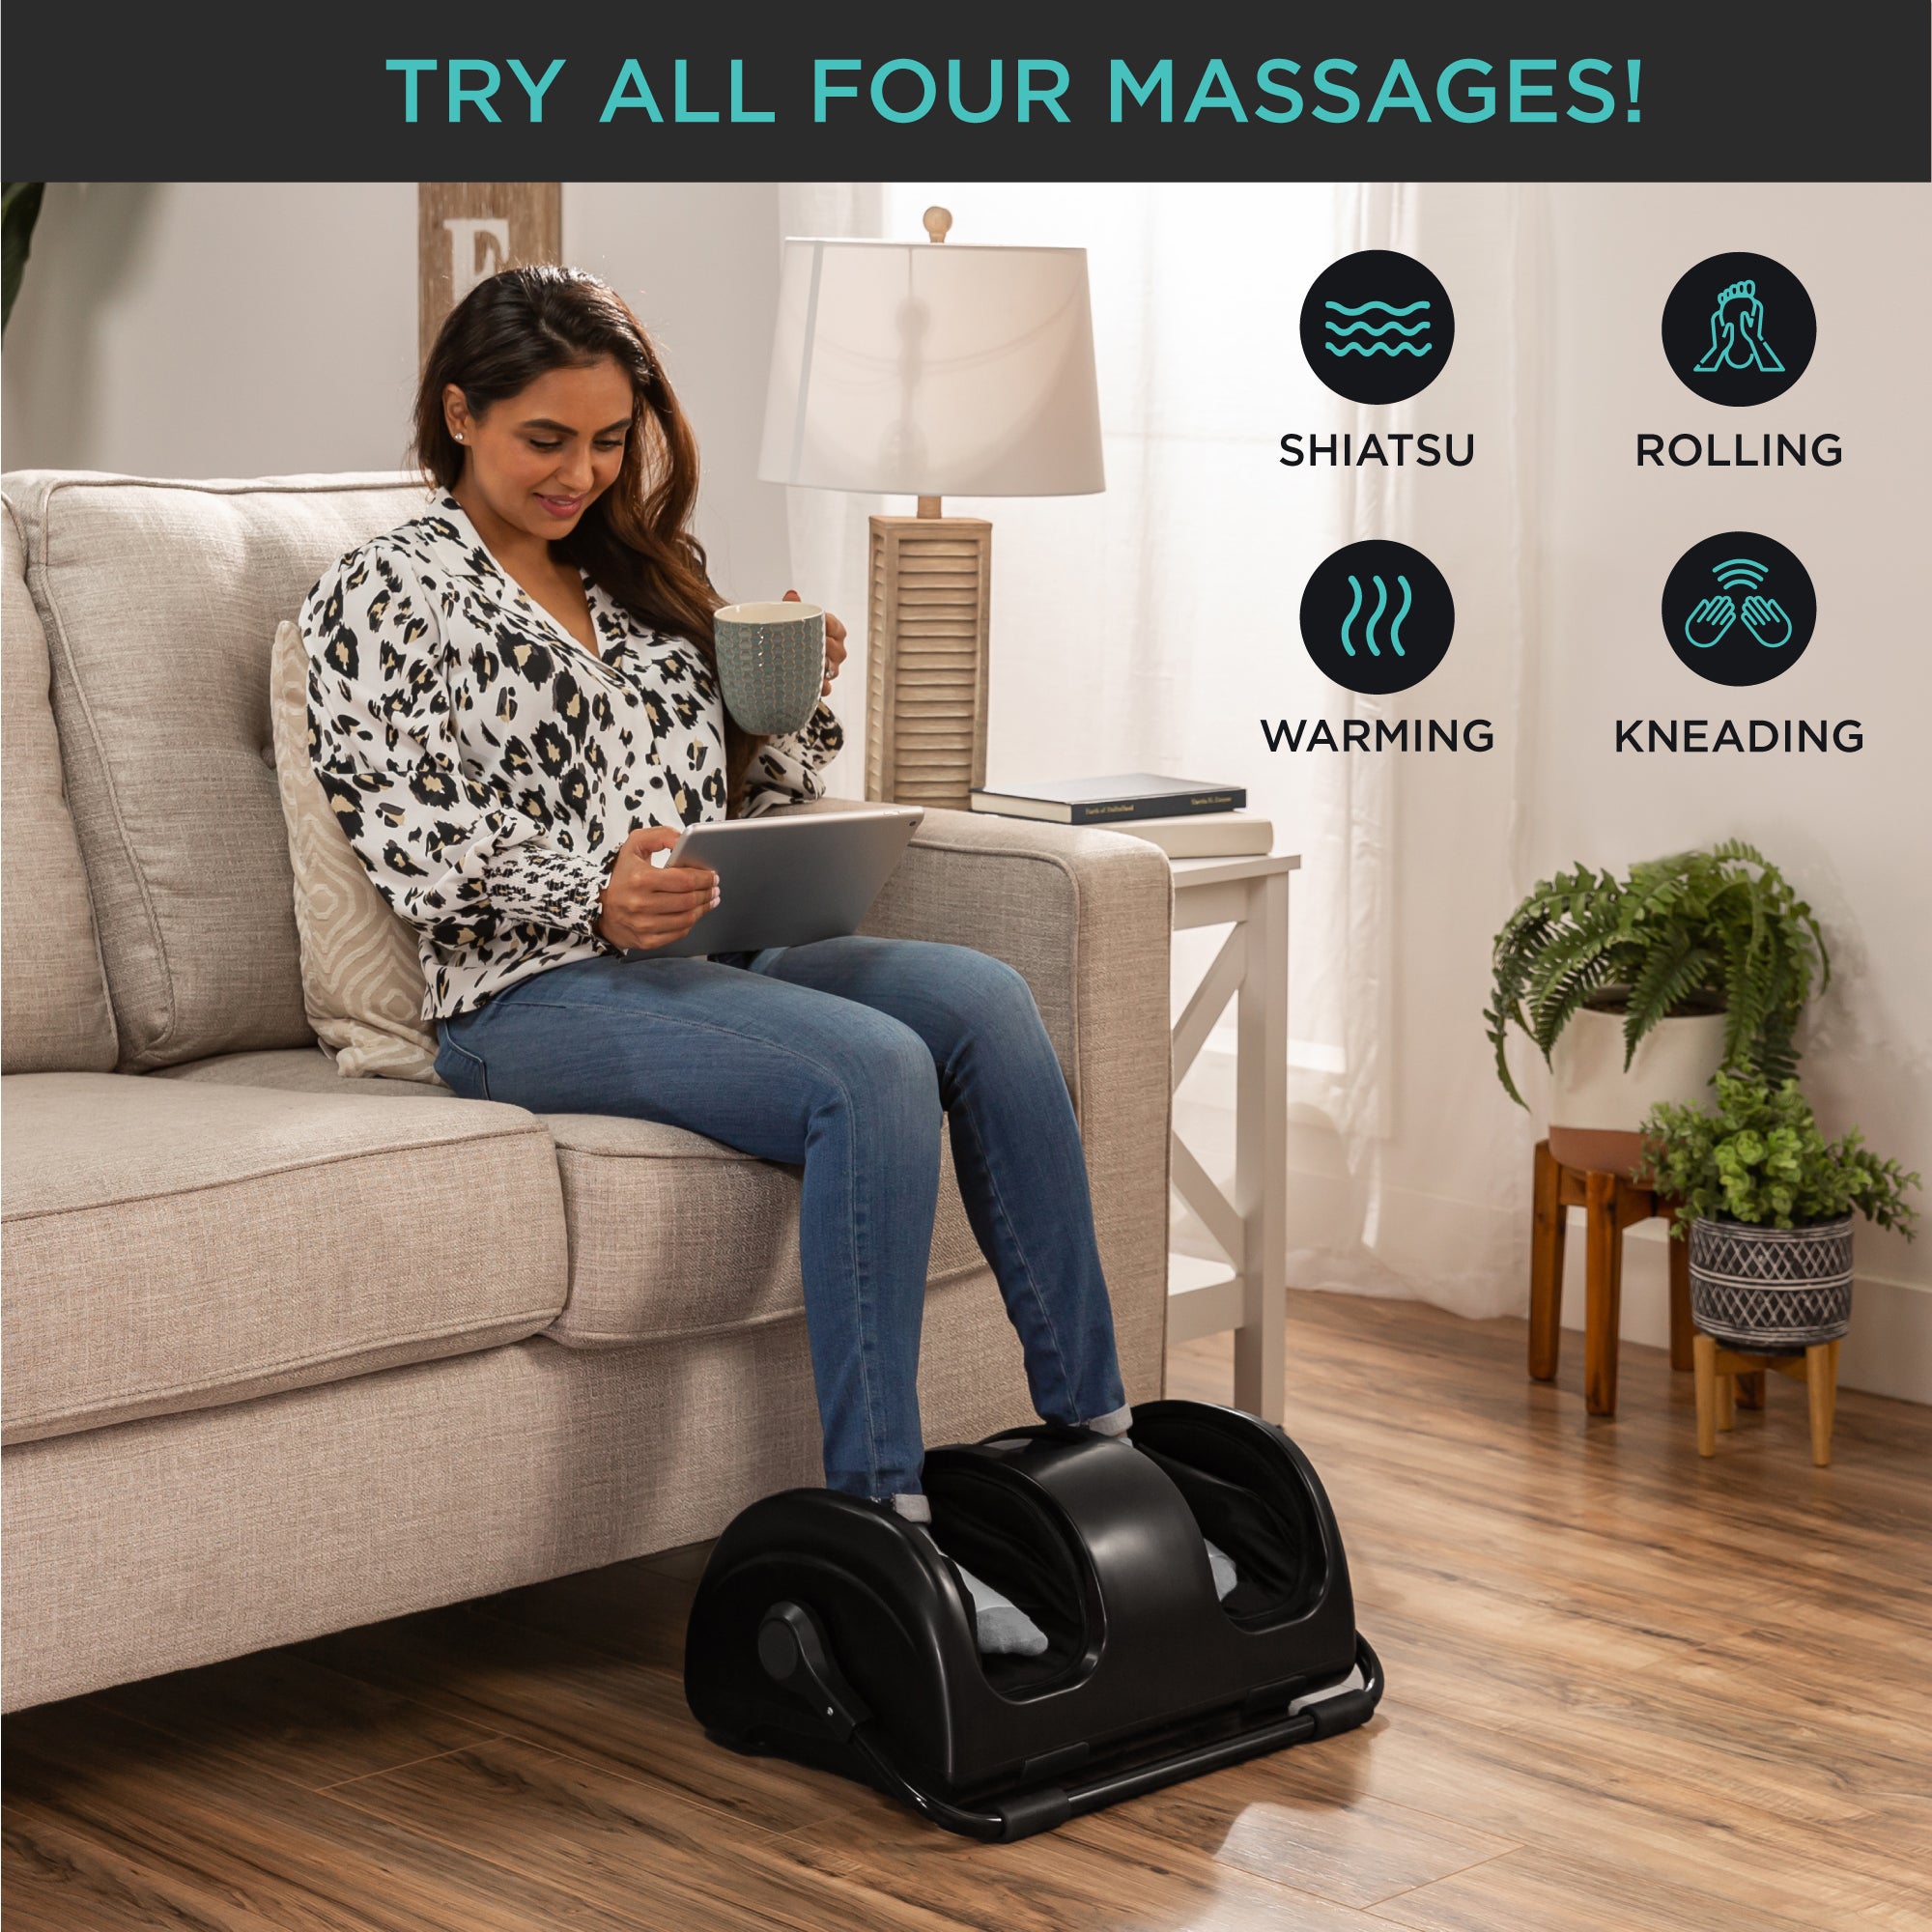 Best Choice Products Shiatsu Foot Massager, Electric Massage Platform w/ 6 Rollers, Heat Function - Gray